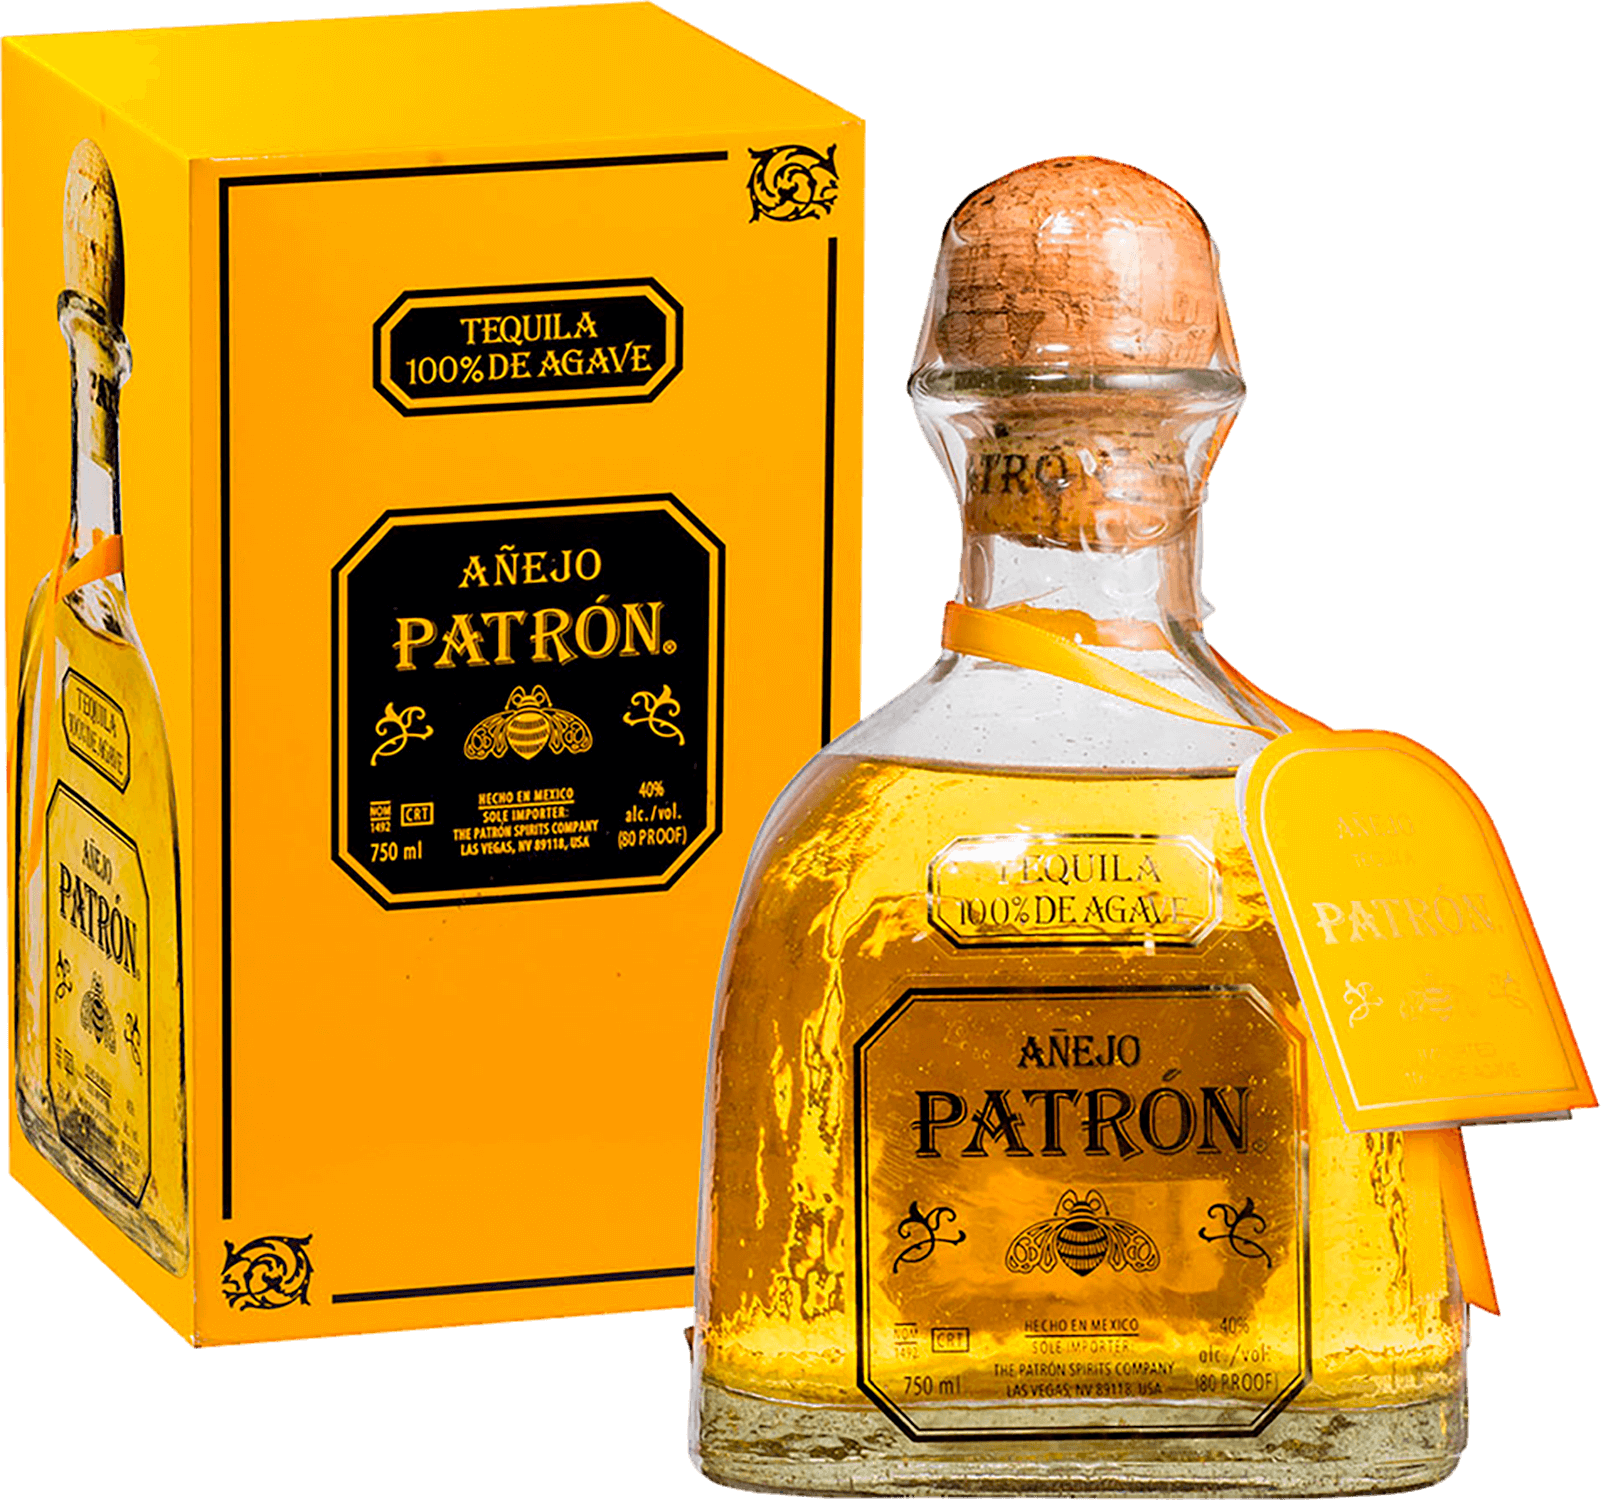 Patron Anejo (gift box) rum havana club maximo extra anejo gift box